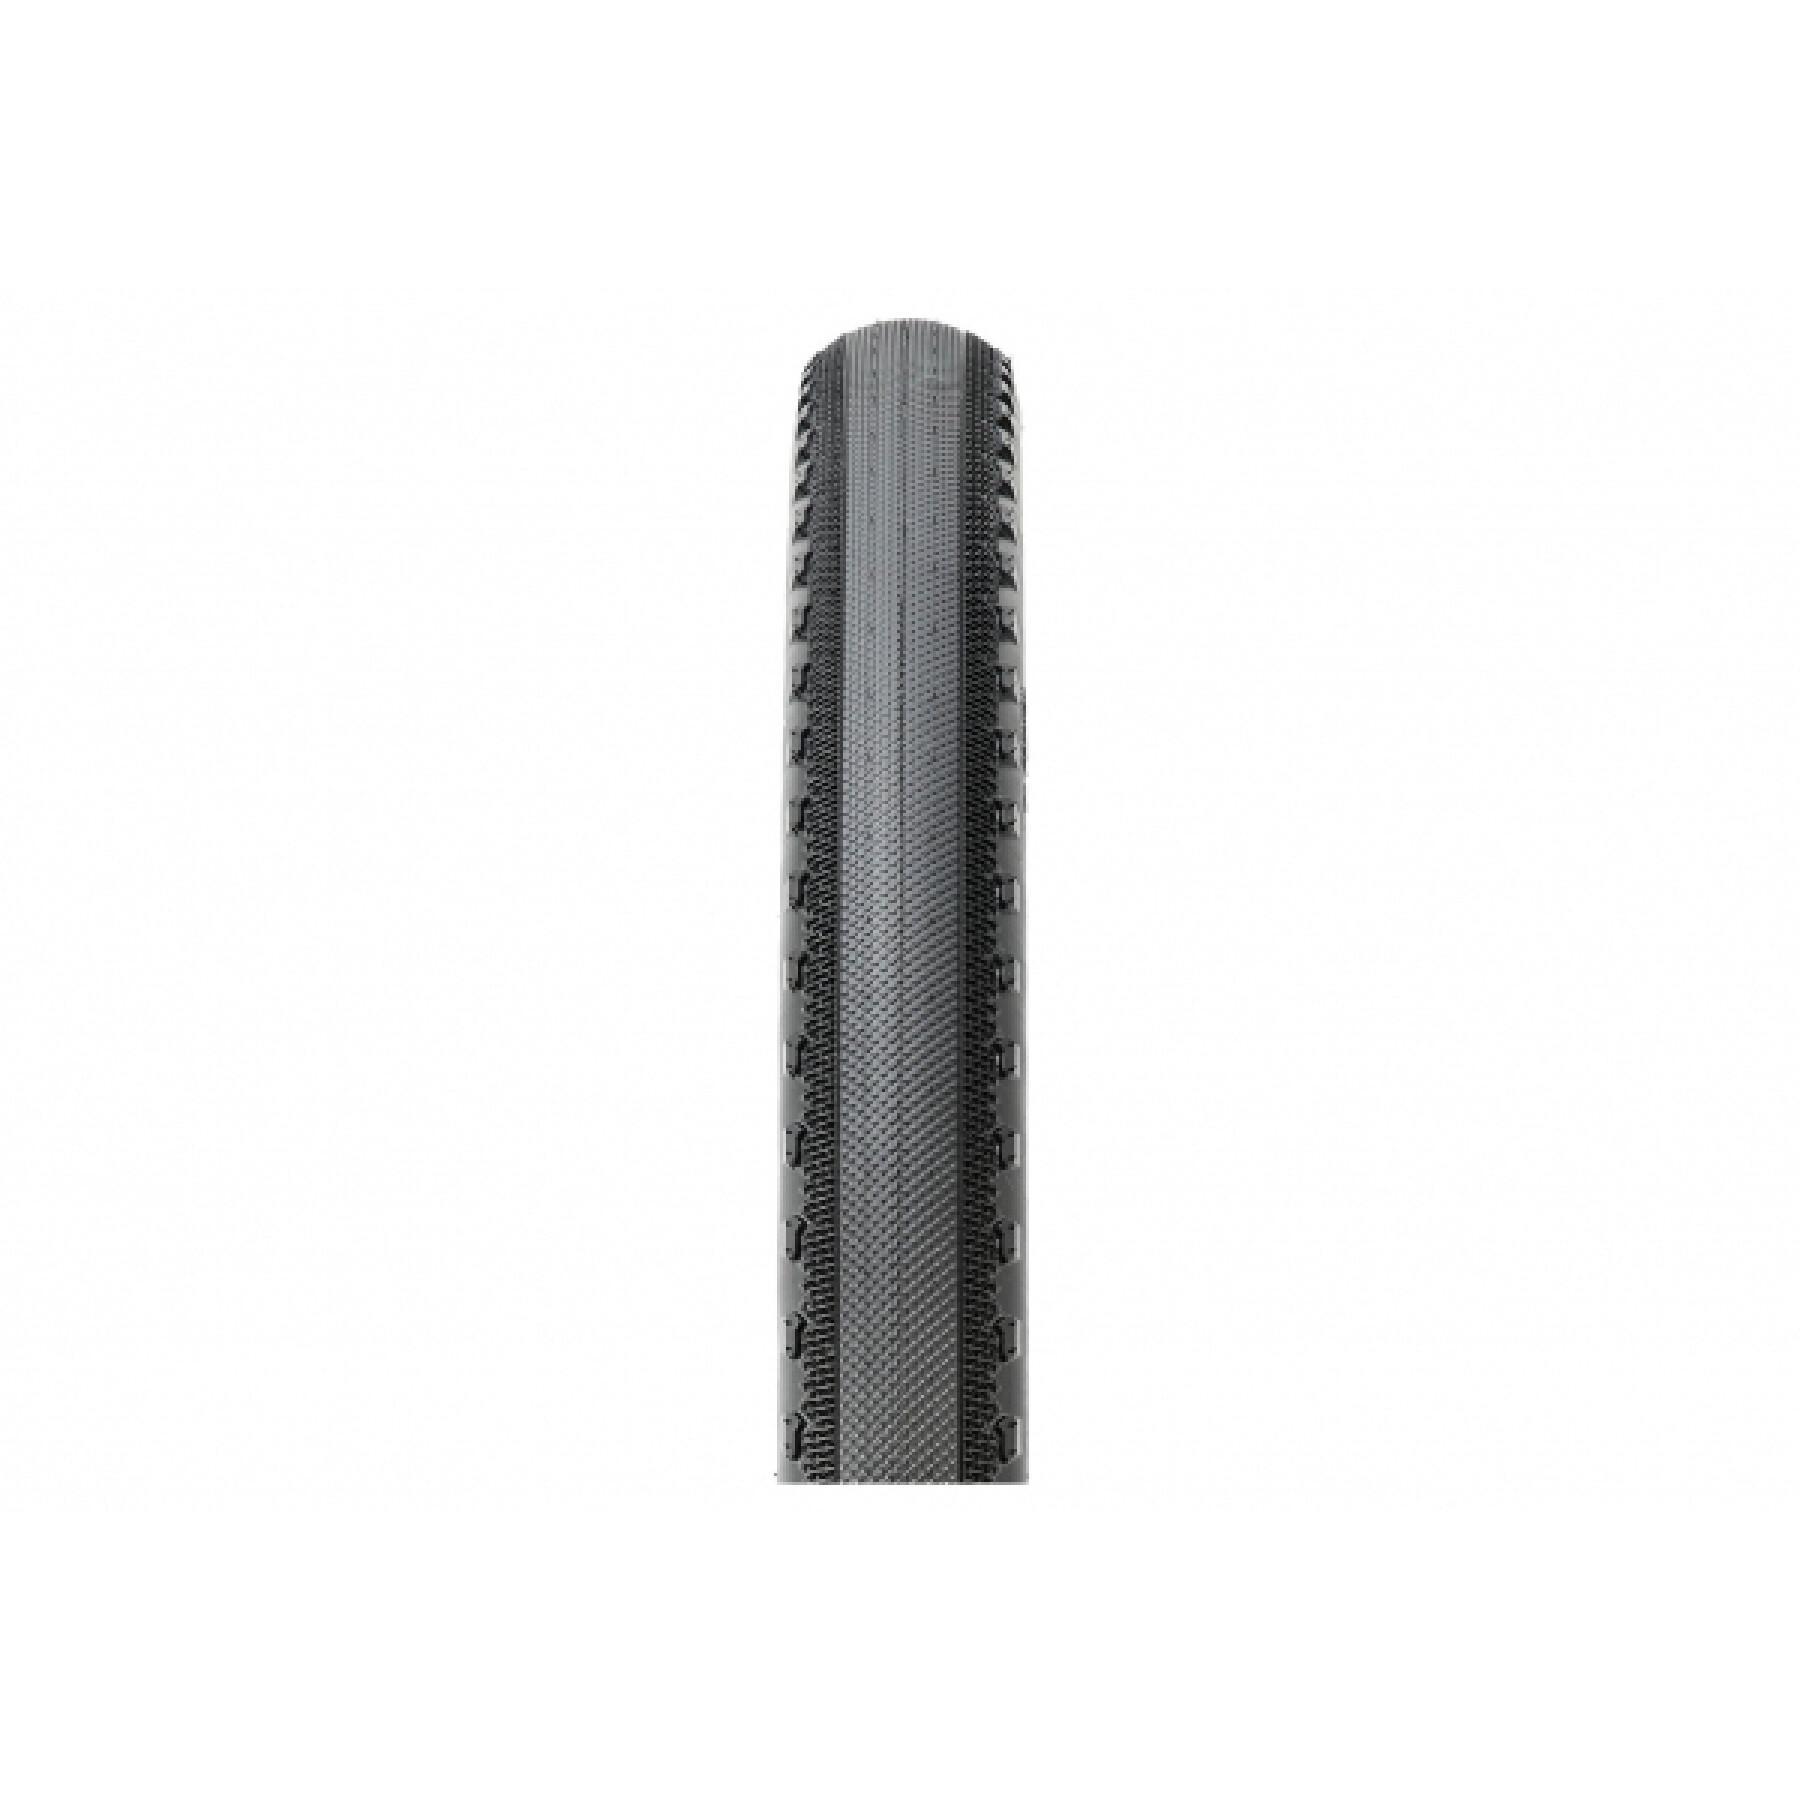 Neumático blando Maxxis Receptor 700x40c Exo / tubeless Ready / tanwall